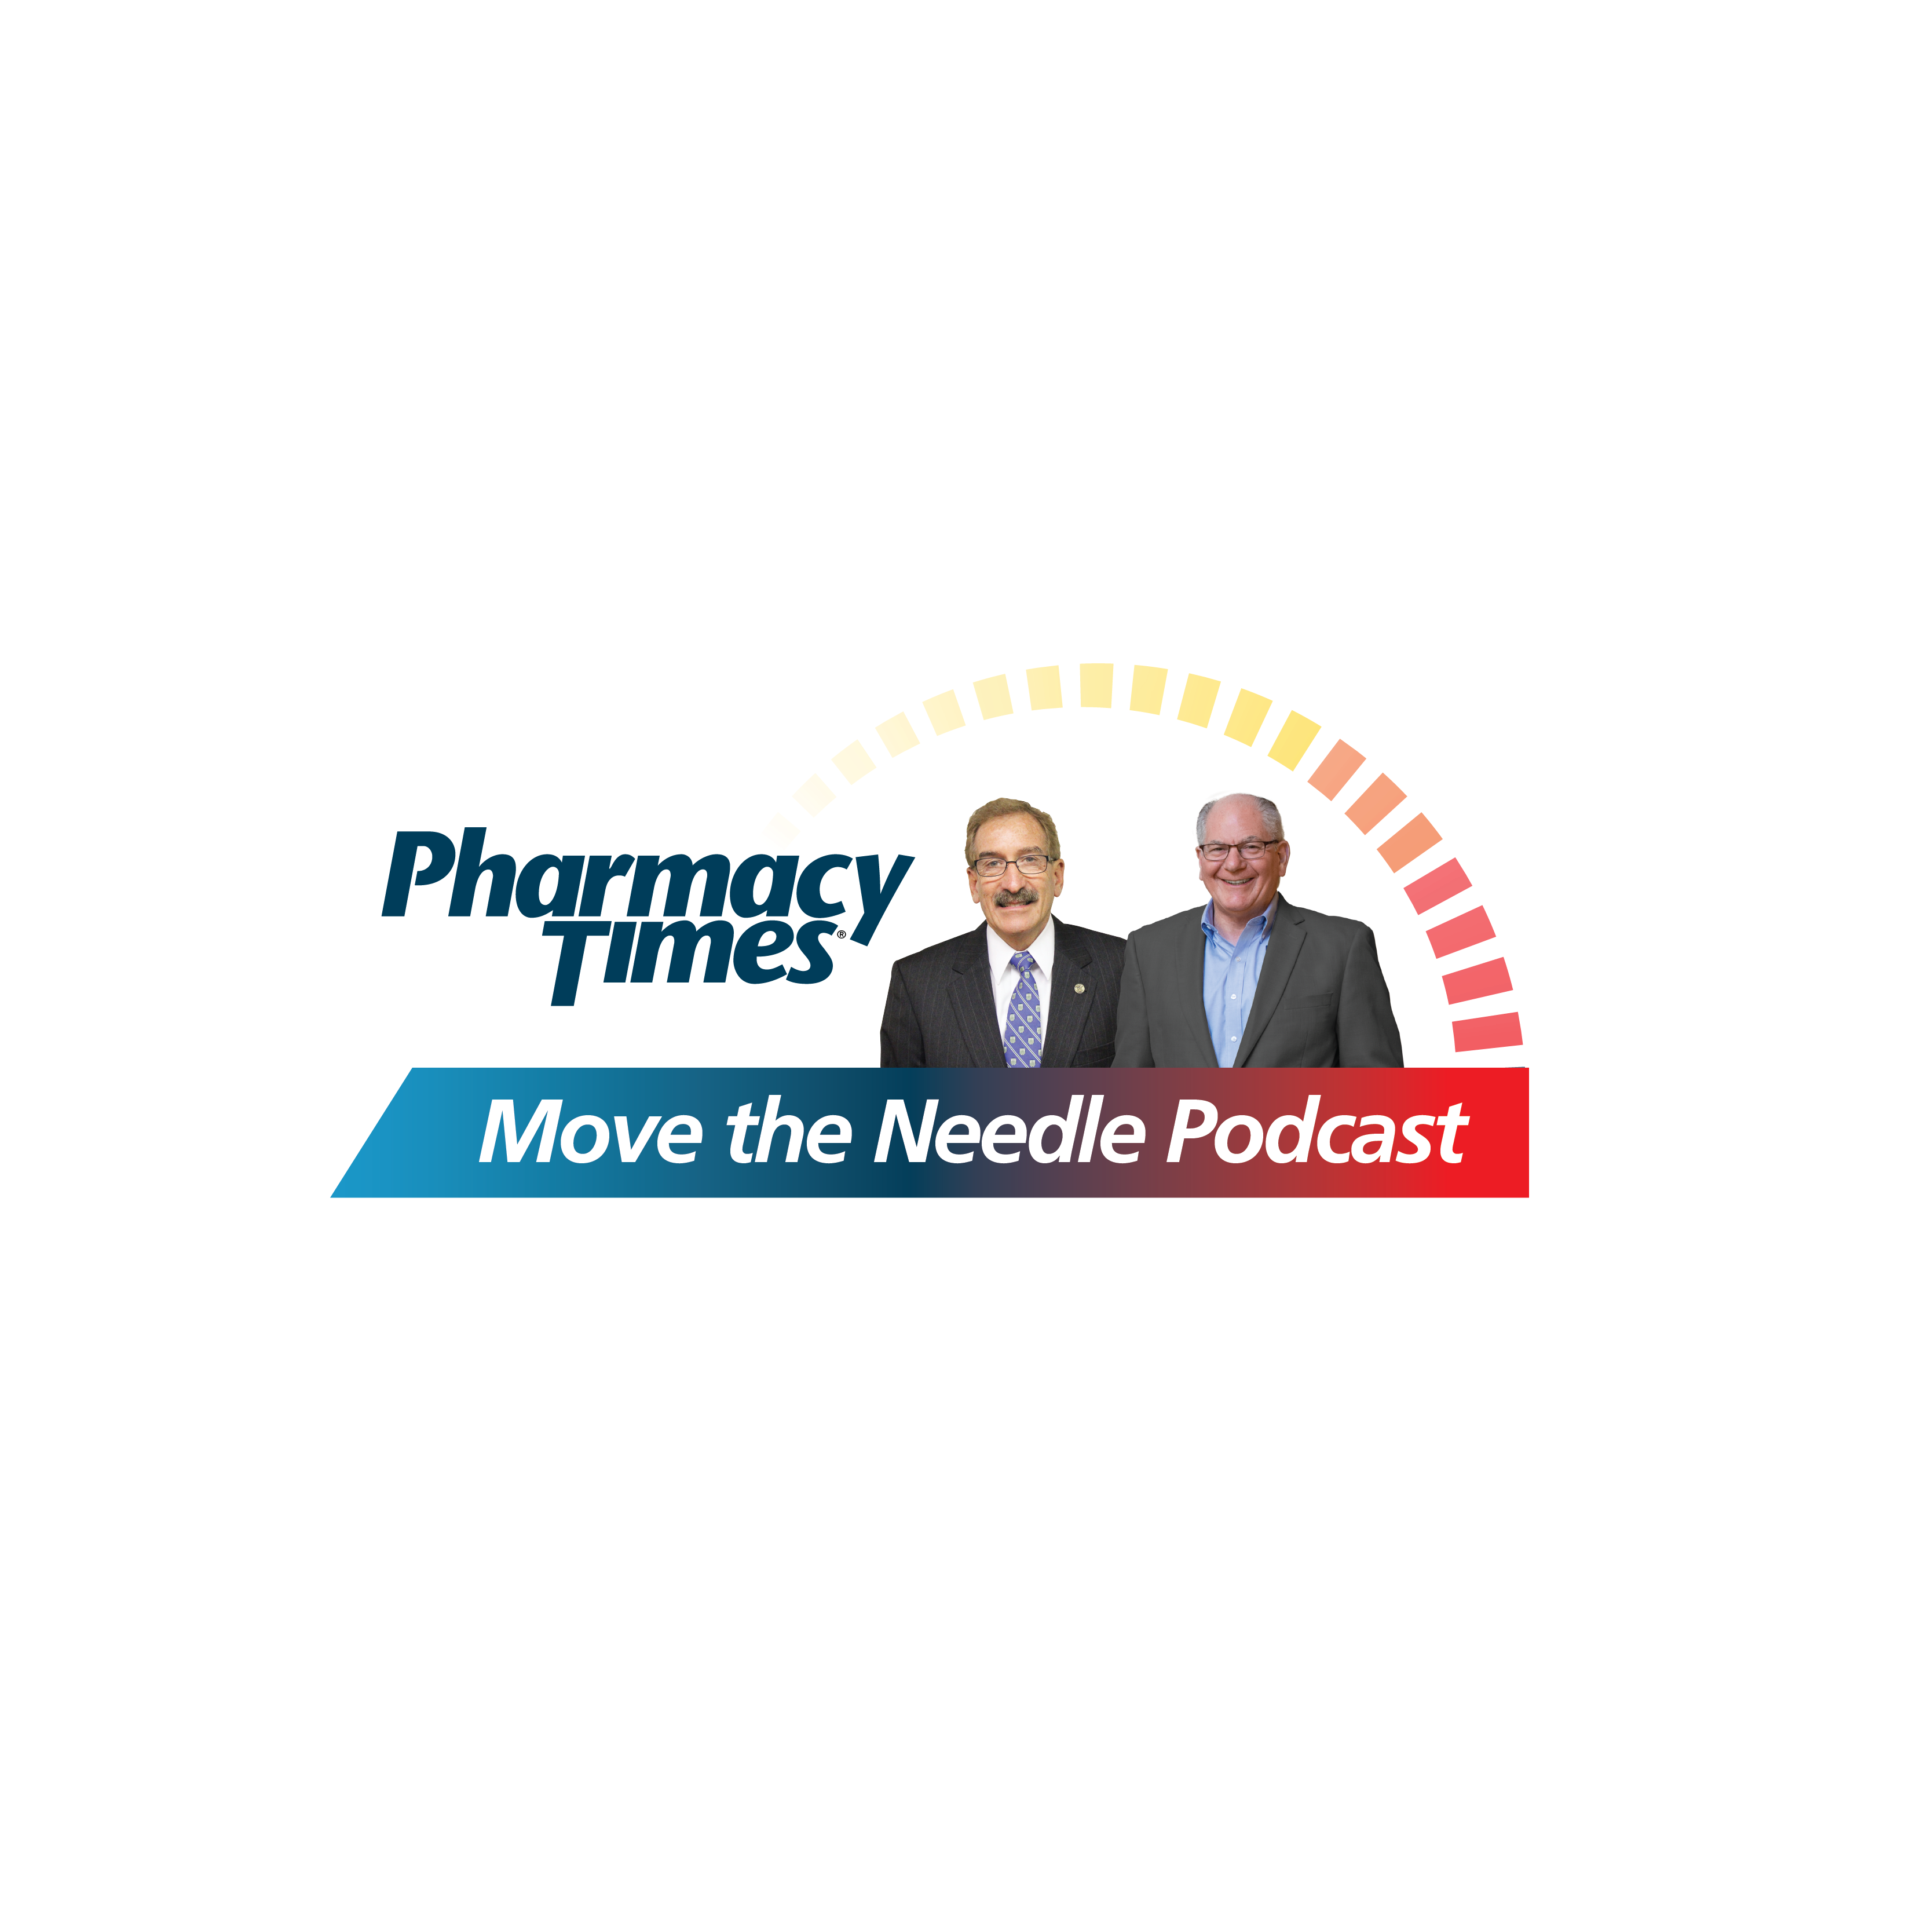 Pharmacy Focus Podcast: New Series - Move the Needle Monday